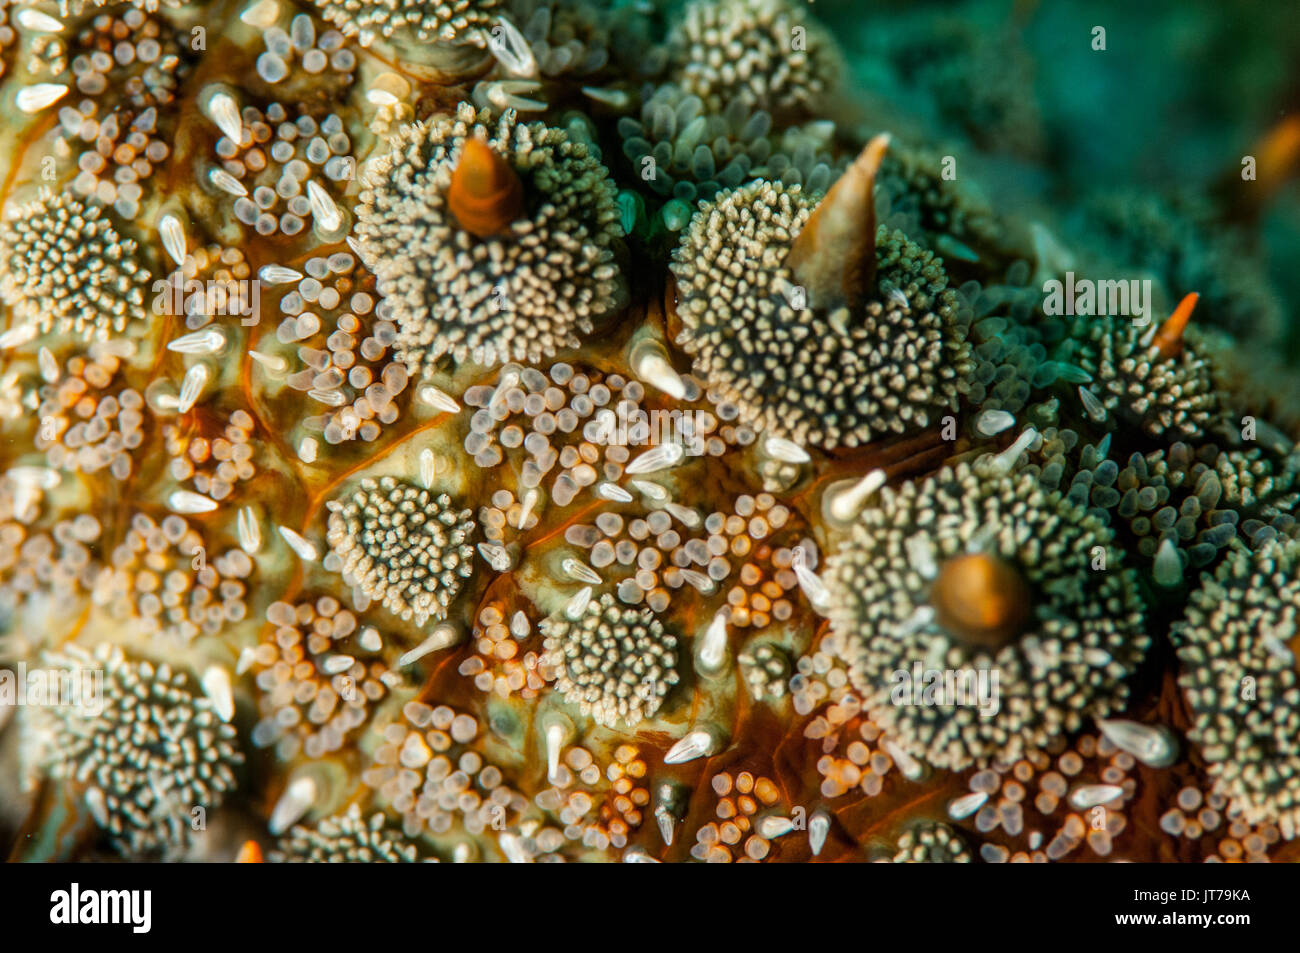 a close-up view of a spiny starfish (Marthasterias glacialis), L'escala, Costa Brava, Catalonia, Spain Stock Photo